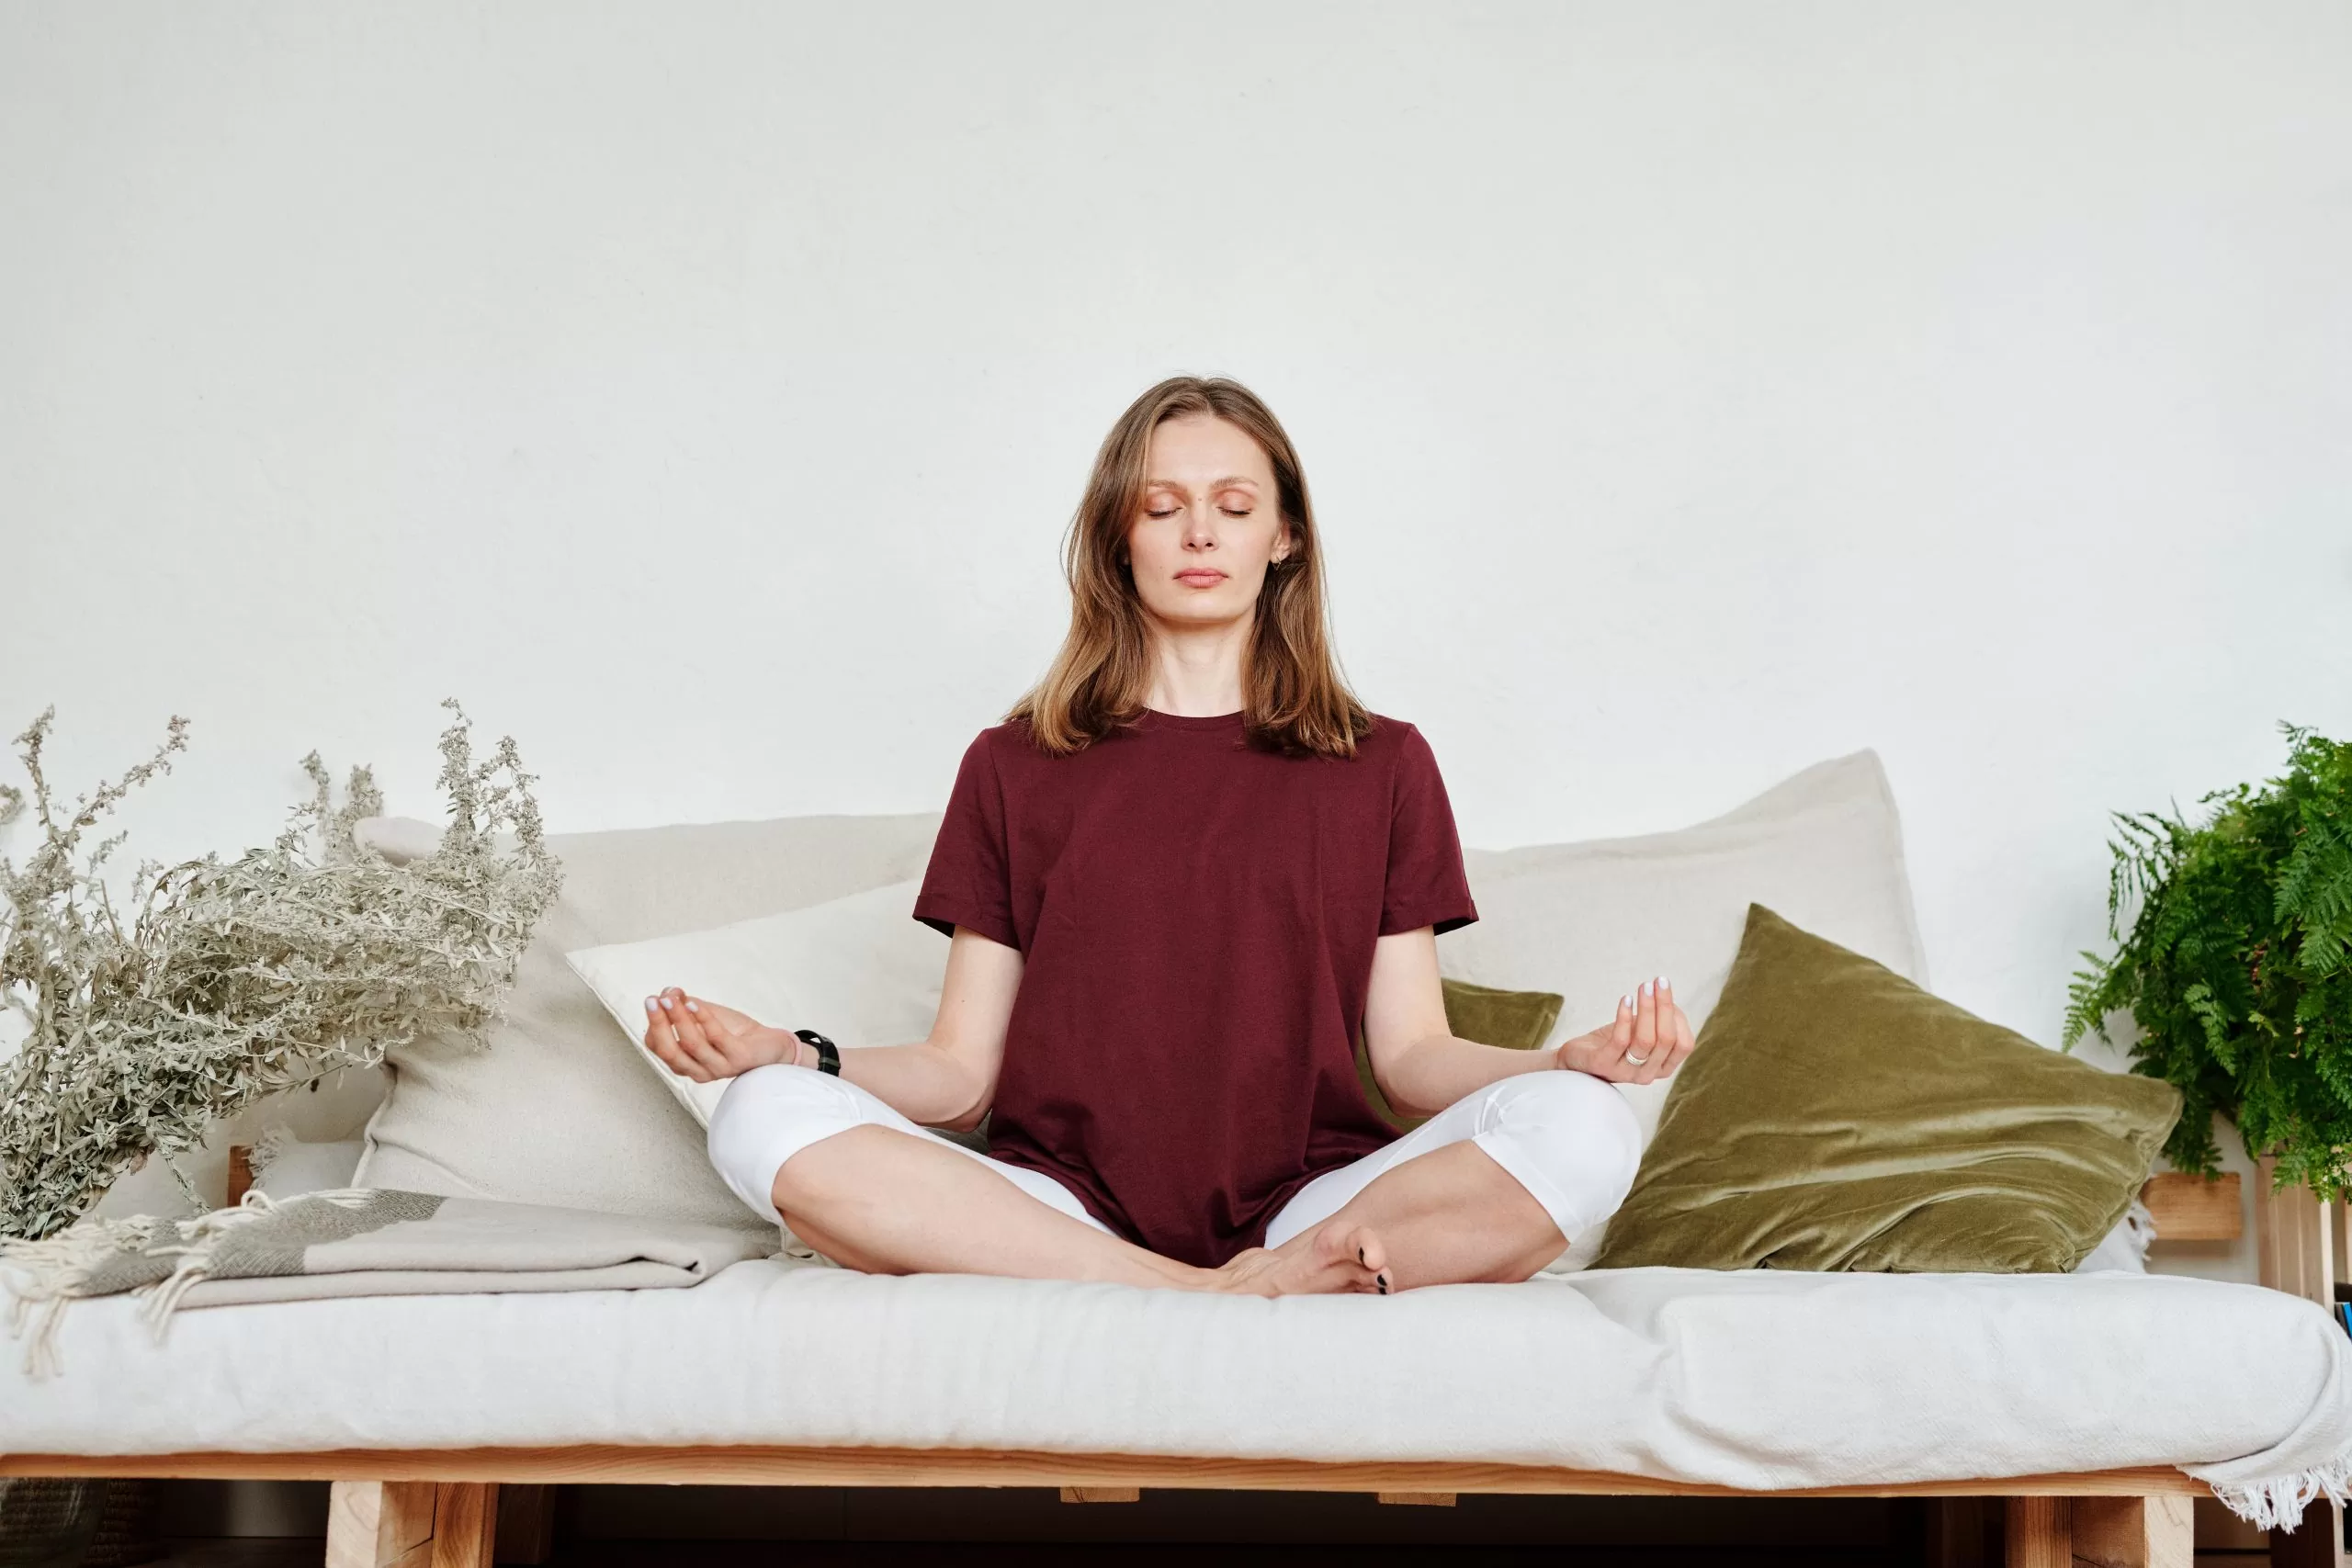 Meditation habits